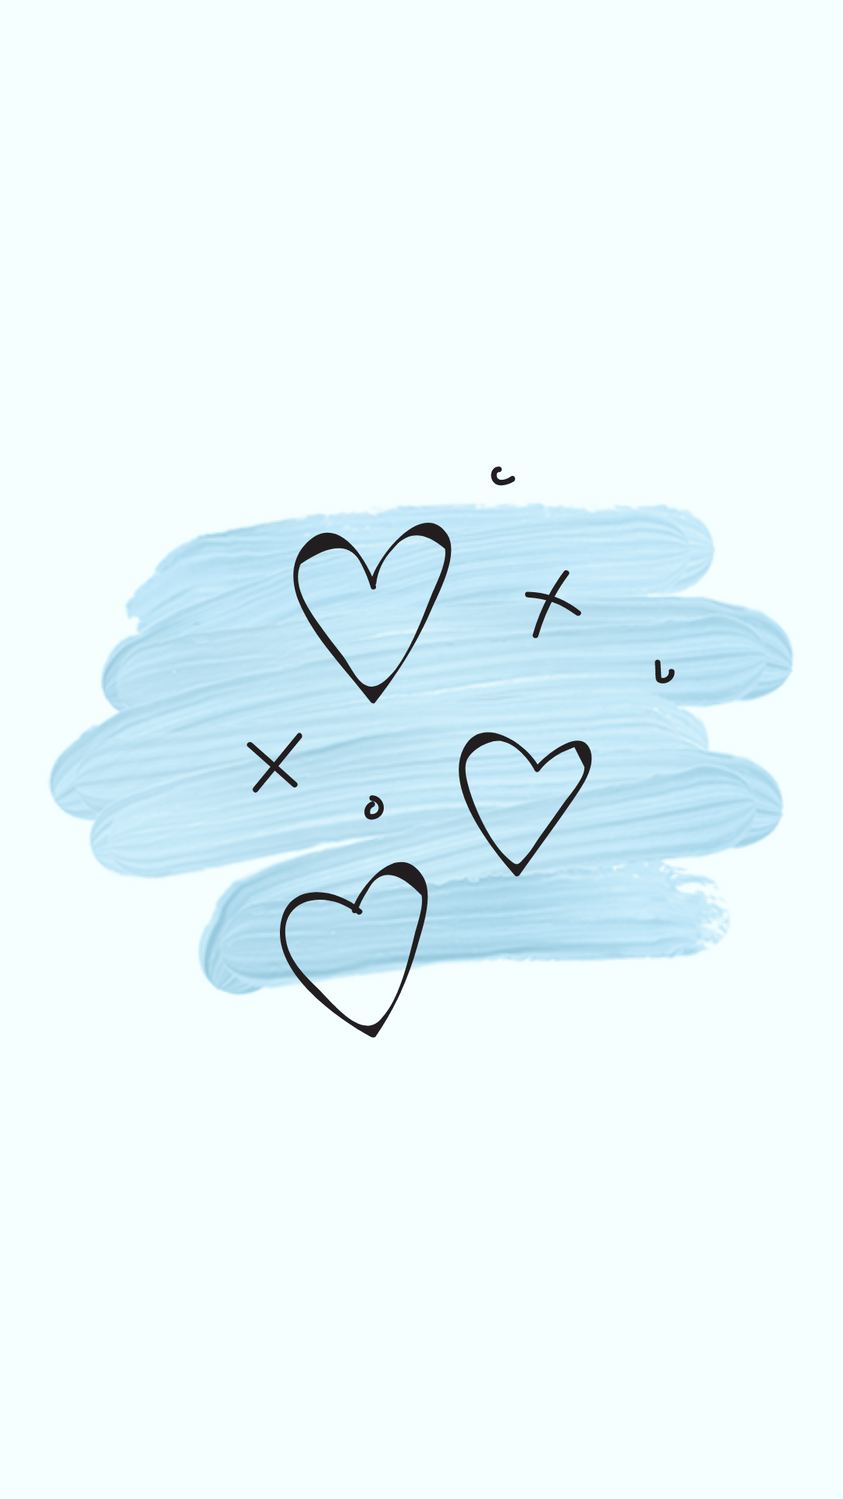 A blue speech bubble with three hearts - Heart